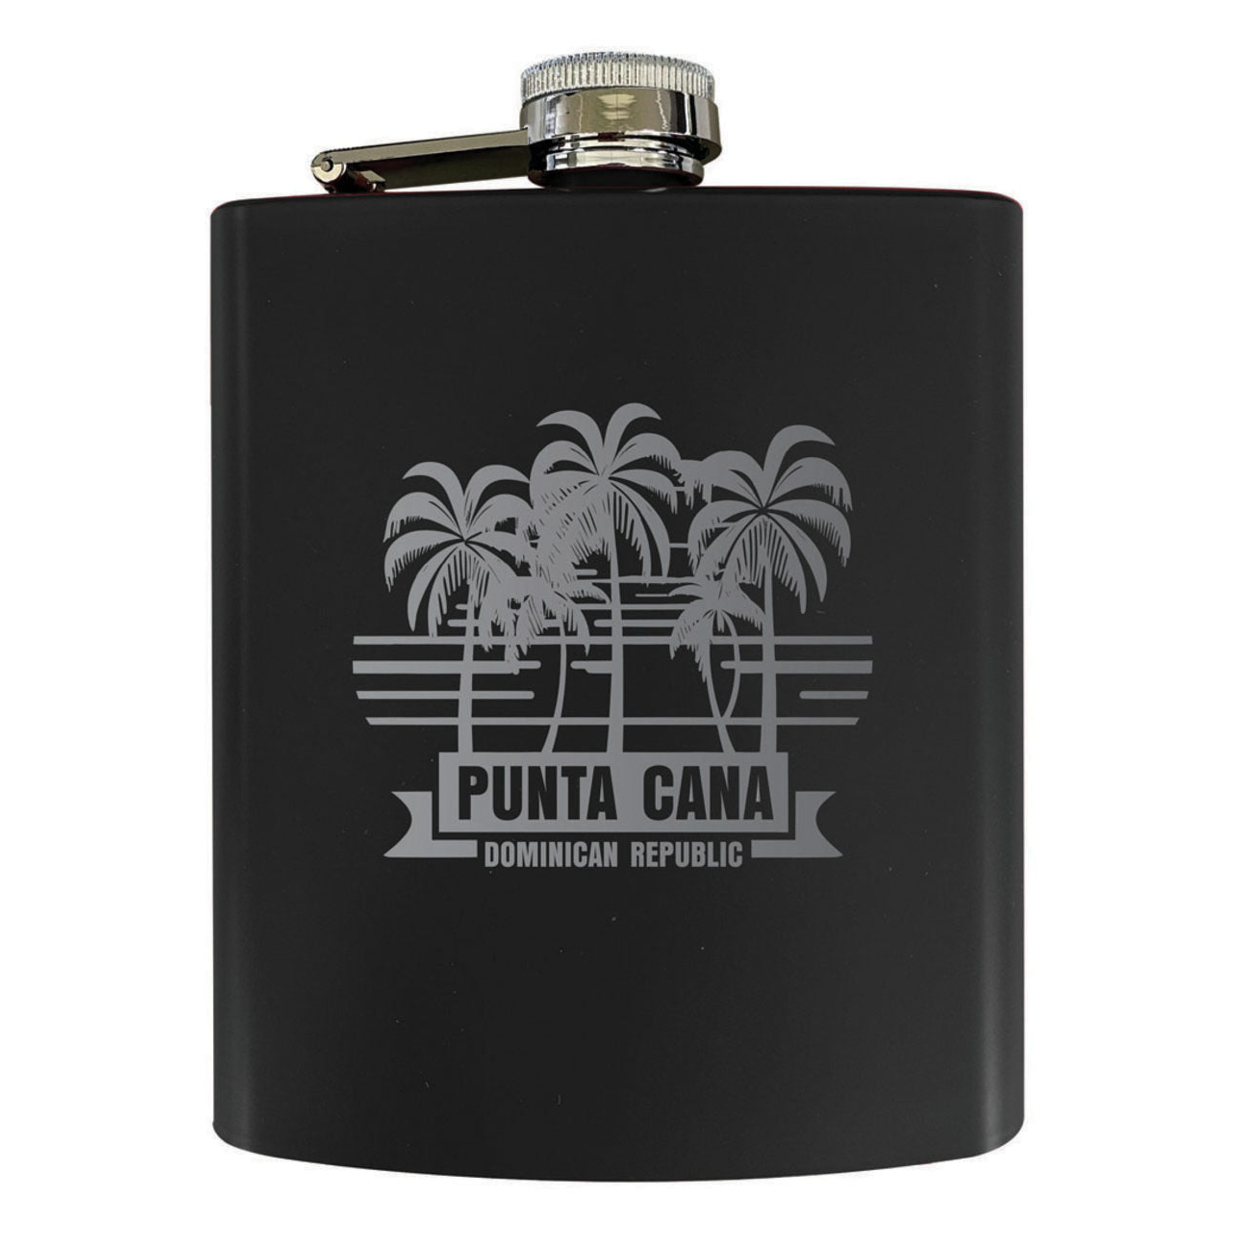 Punta Cana Dominican Republic Souvenir Engraved Matte Finish Stainless Steel 7 Oz Flask - Black, PALM BEACH